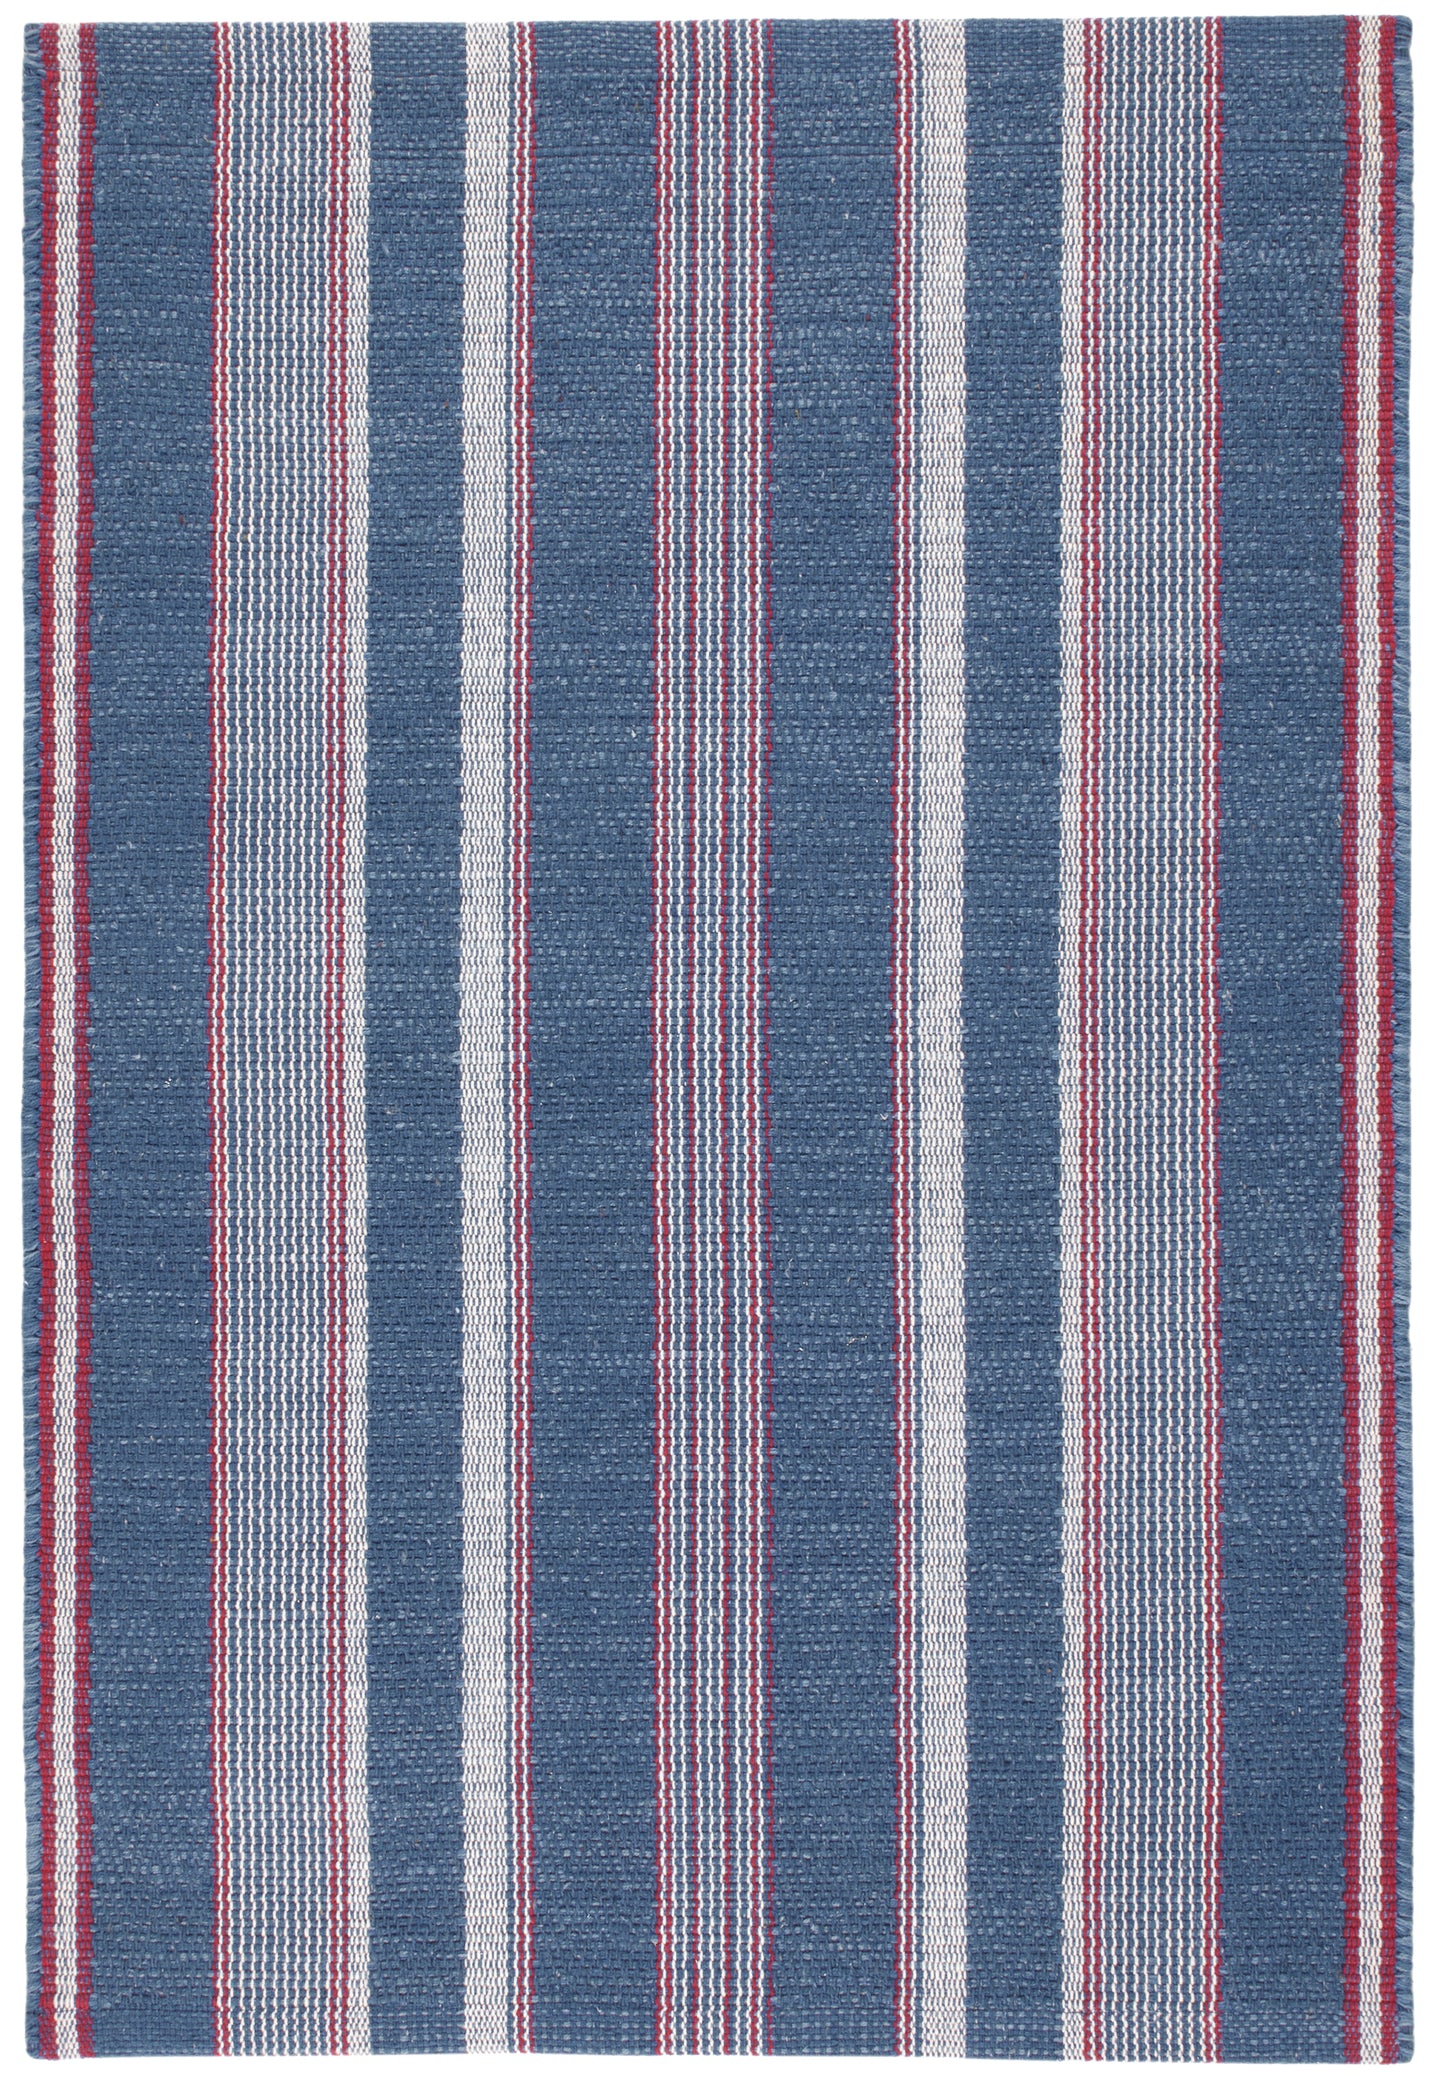 Rug - Woven Cotton - Camden Stripe Denim